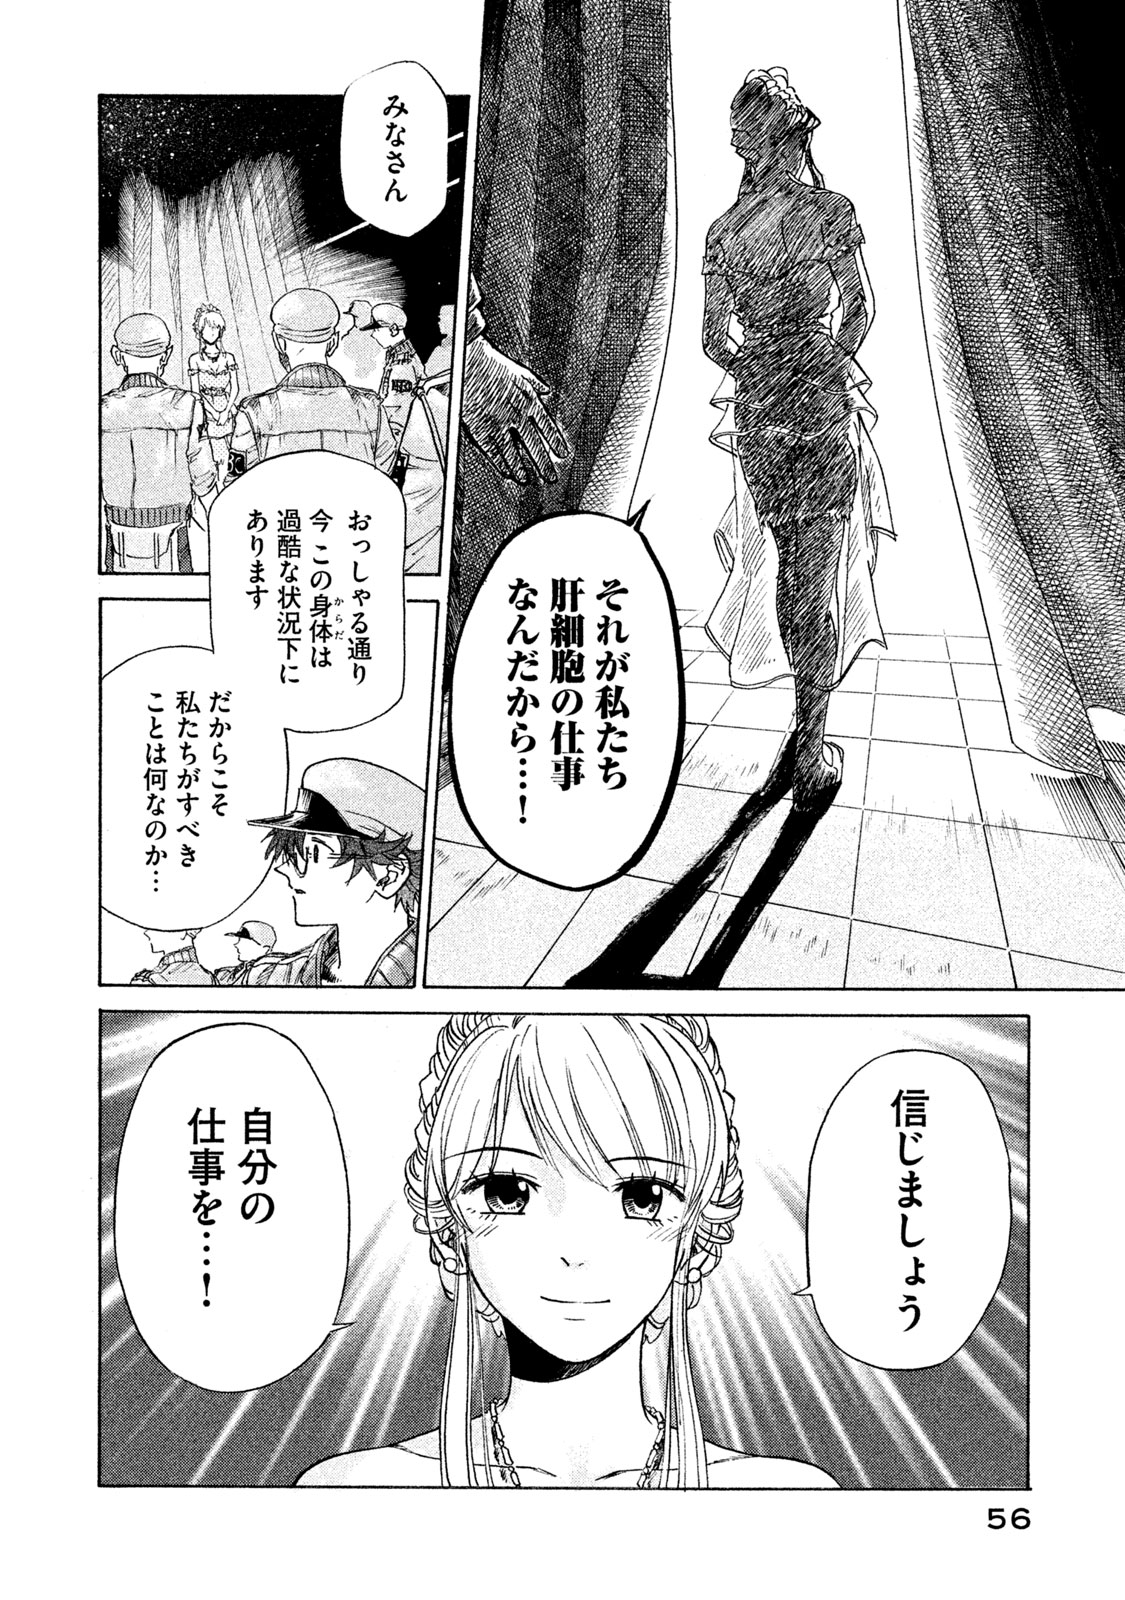 Hataraku Saibou BLACK - Chapter 2 - Page 20